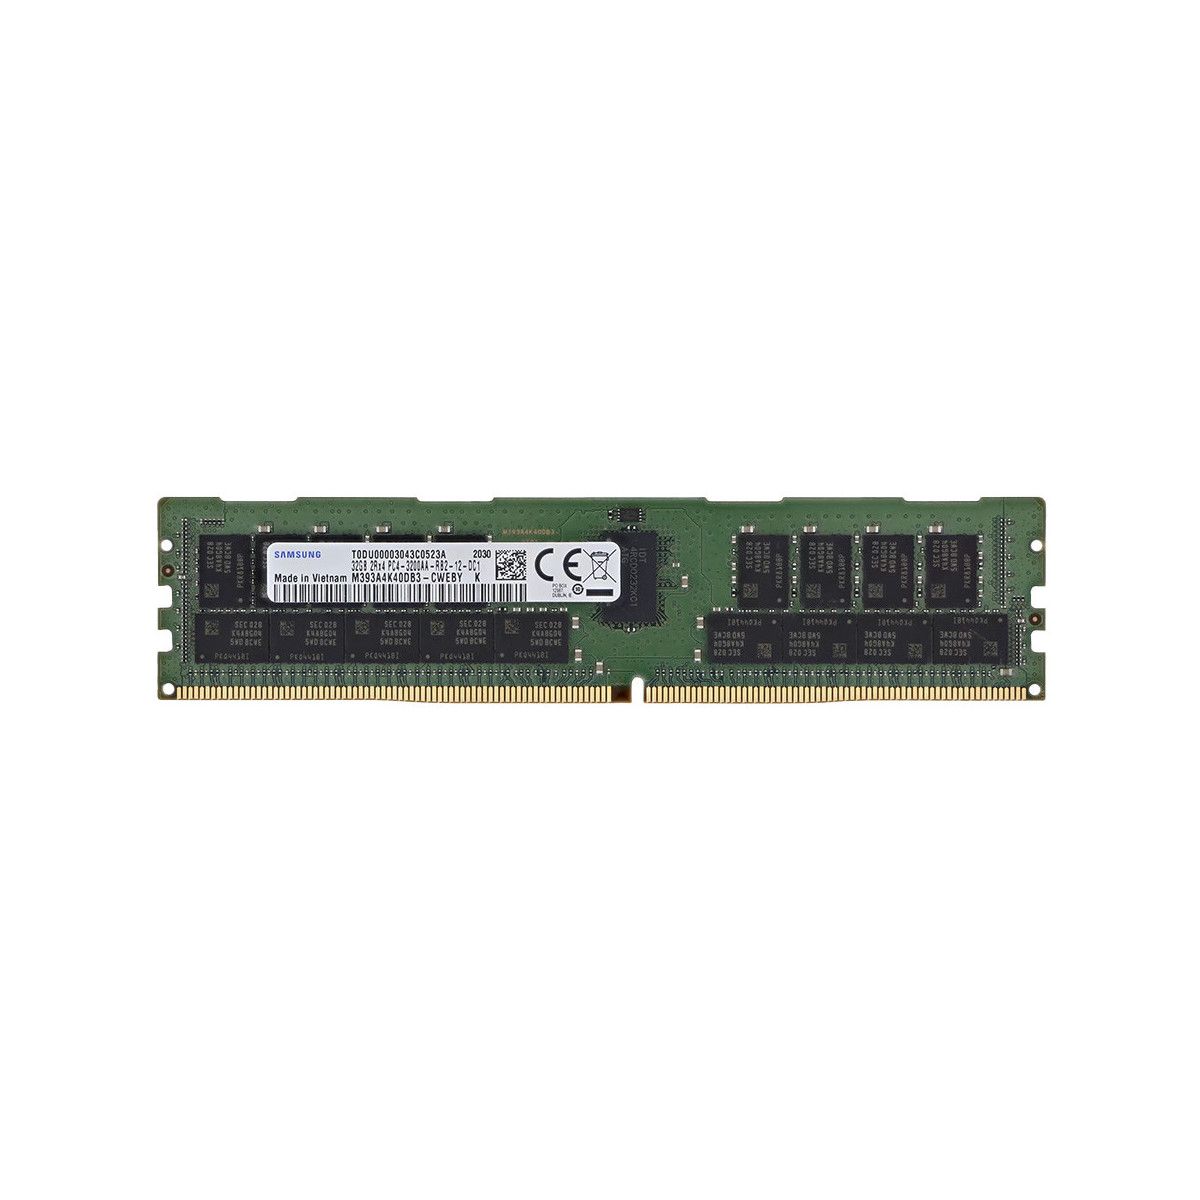 UCSX-MR-X32G2RW-MS - Memstar 1x 32GB DDR4-3200 RDIMM PC4-25600R - Mem-Star Kompatibel OEM Speichermedien 1 - Memstar 